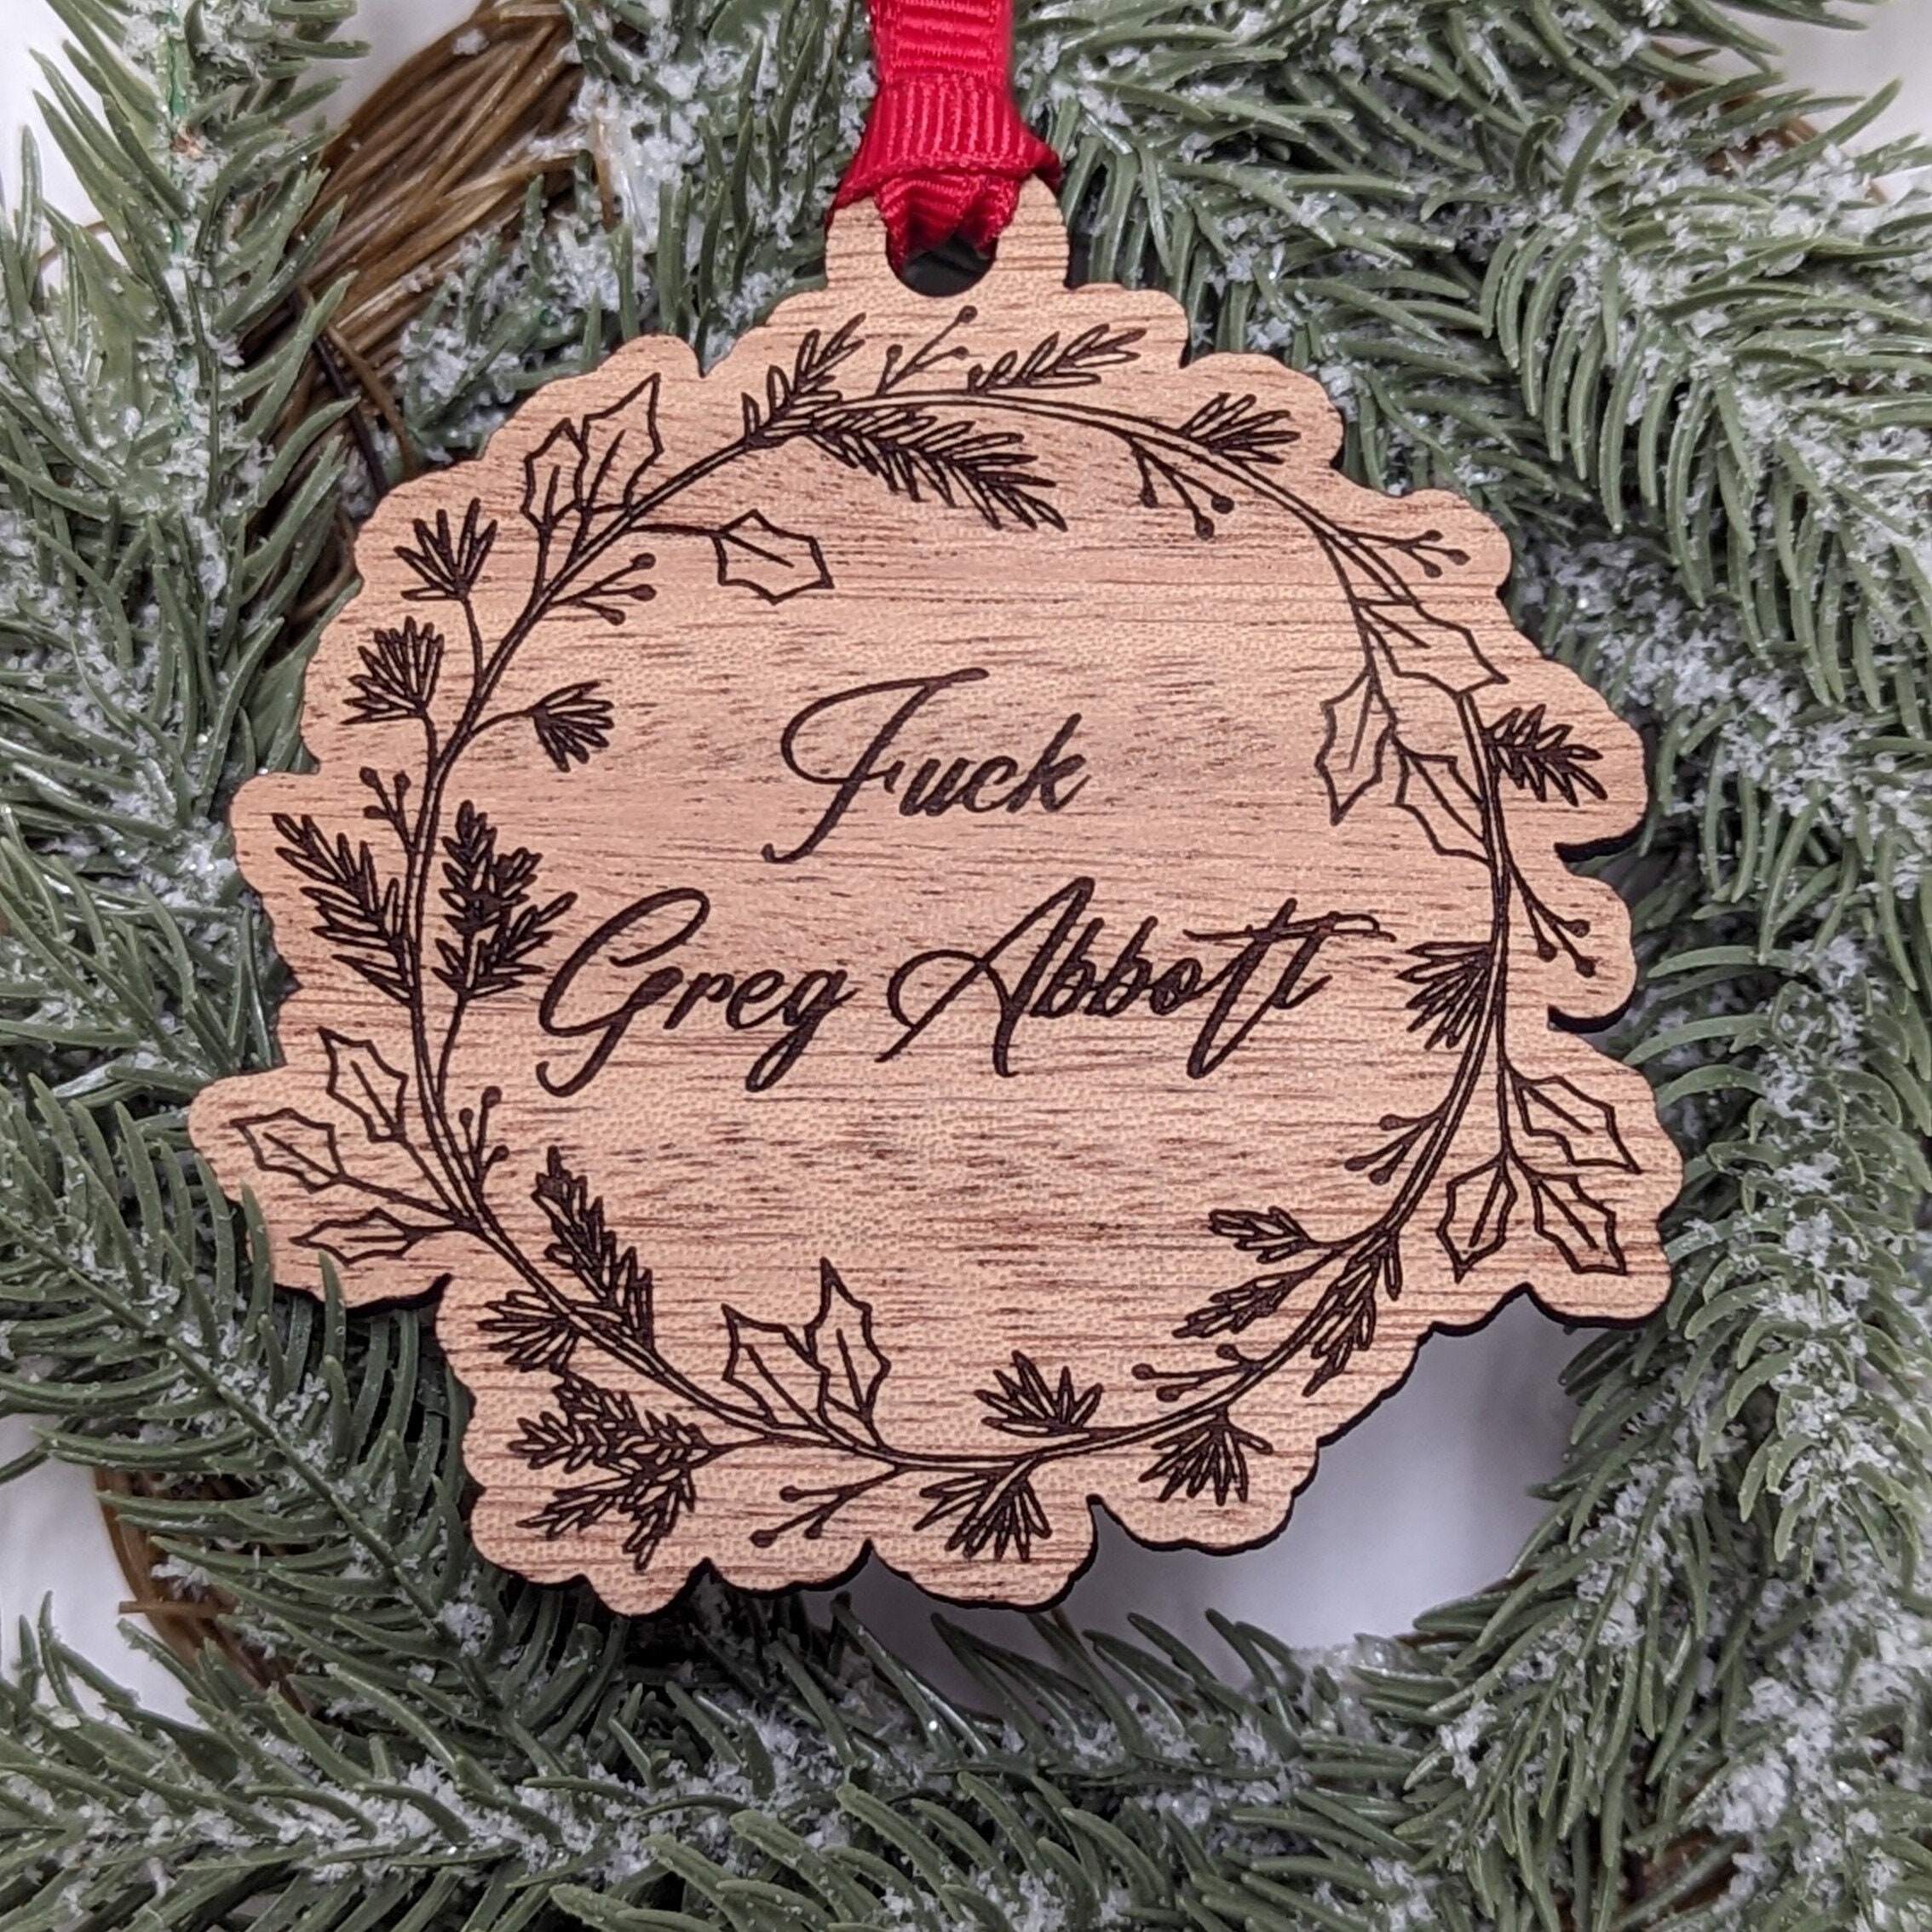 Fuck Greg Abbott Christmas Ornament Funny Shatterproof Xmas pic picture